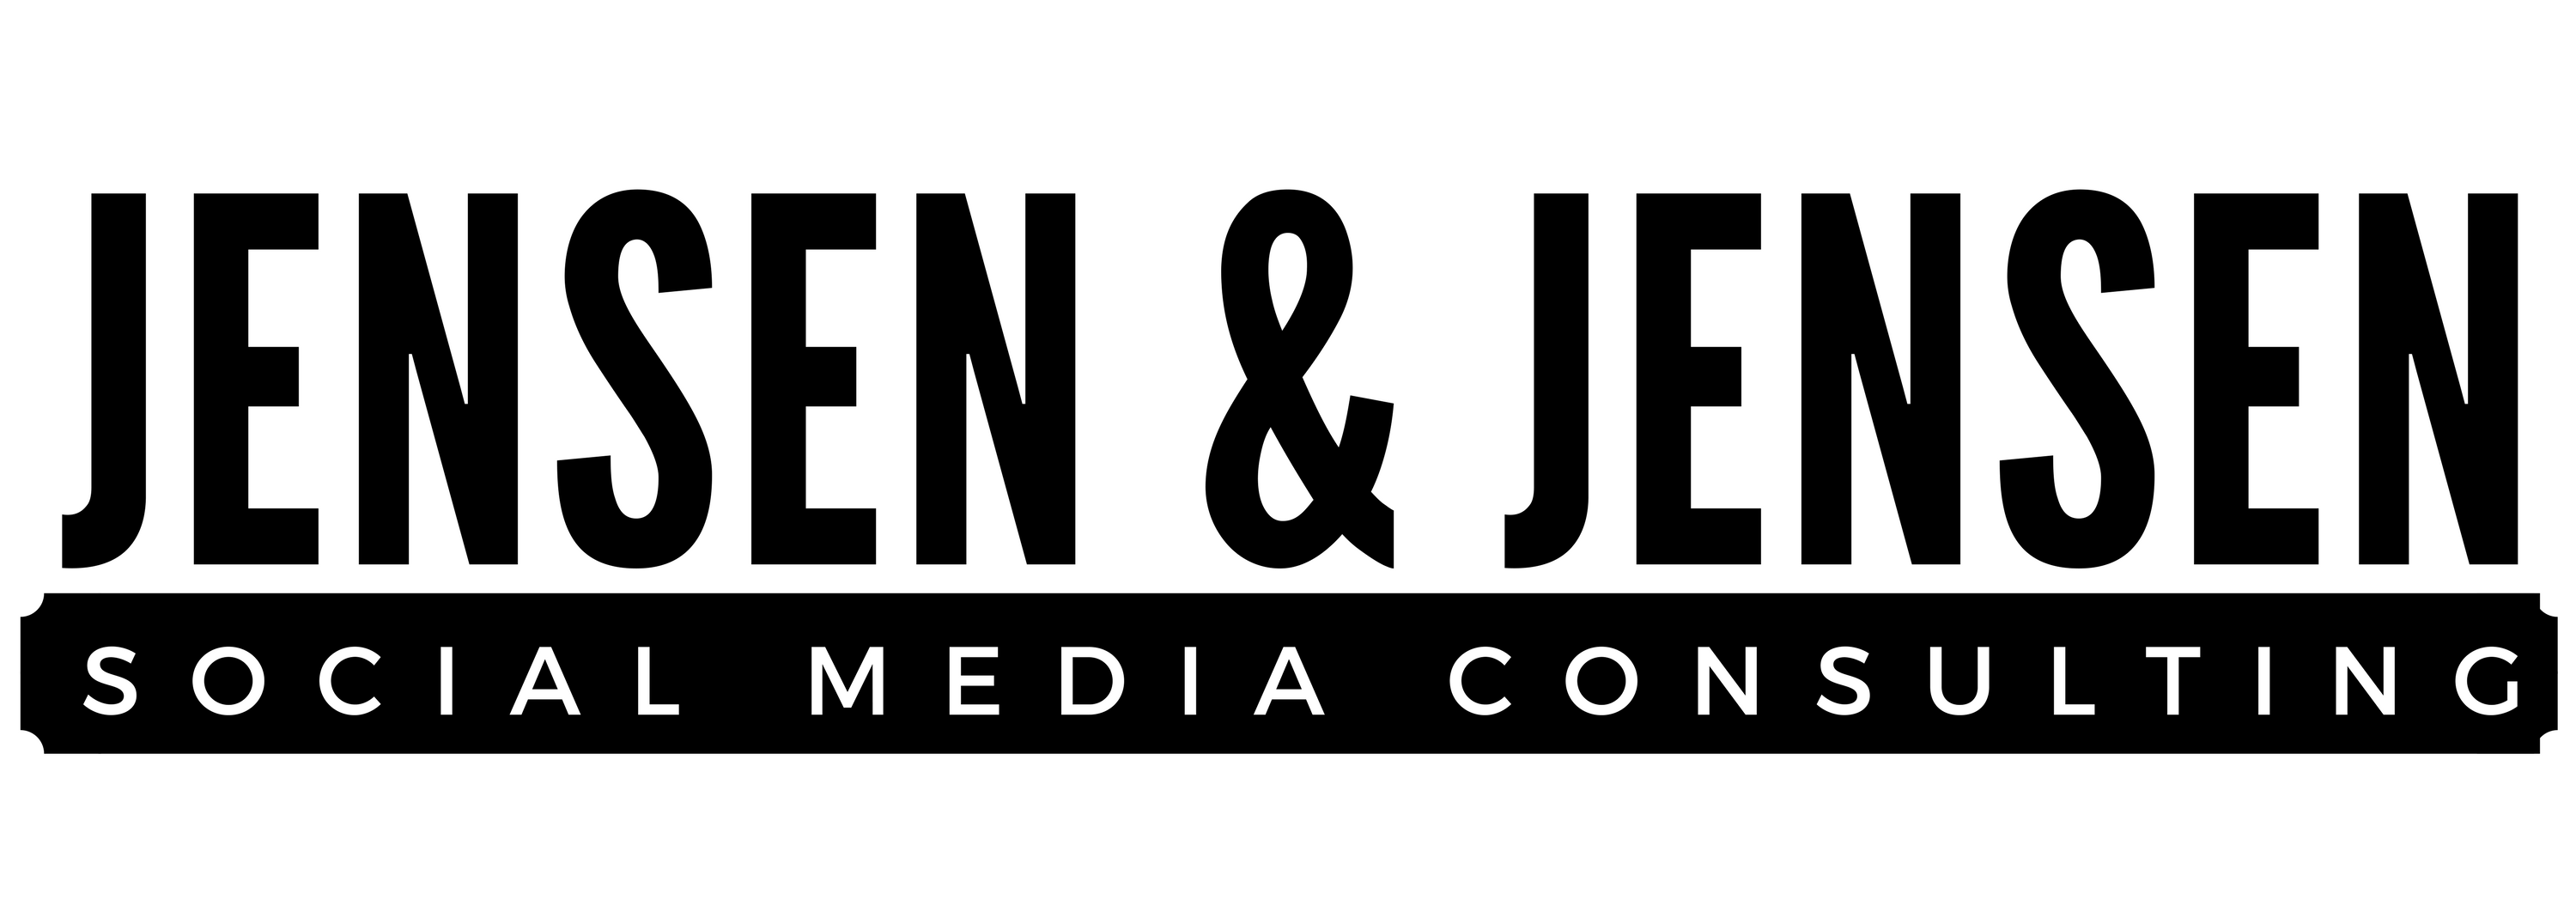 Jensen & Jensen Internet Marketing Consulting